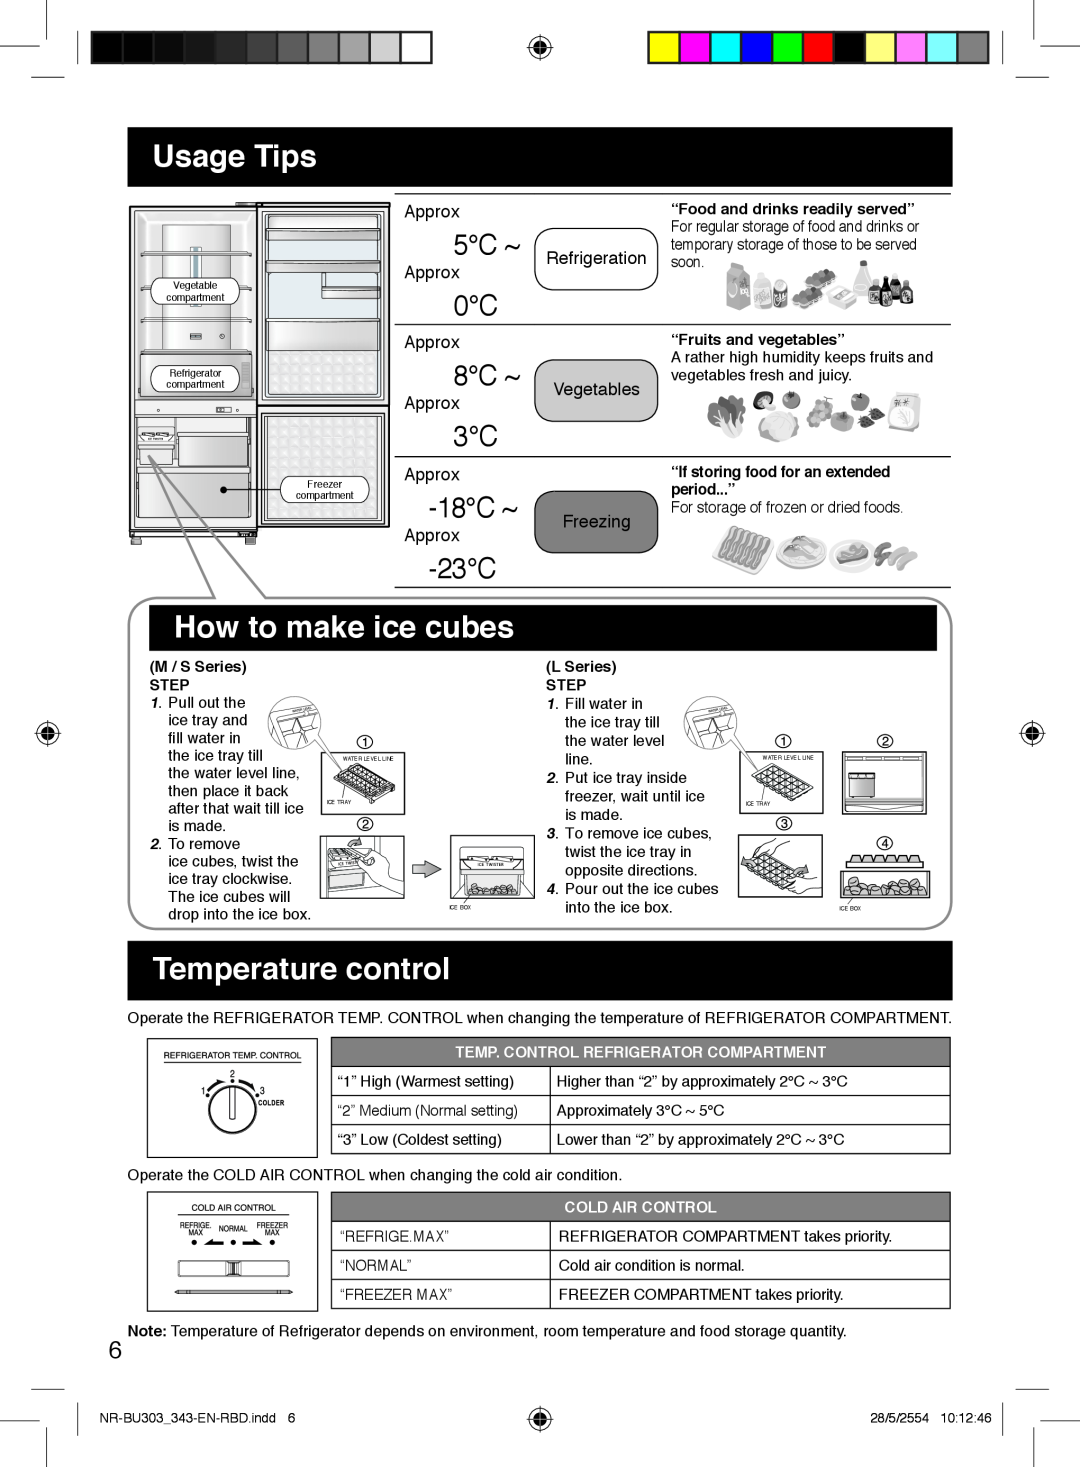 Panasonic NR-BU303 Usage Tips, How to make ice cubes, Temperature control, 5C ~, 8C ~, 18C~, Refrigeration, Vegetables 